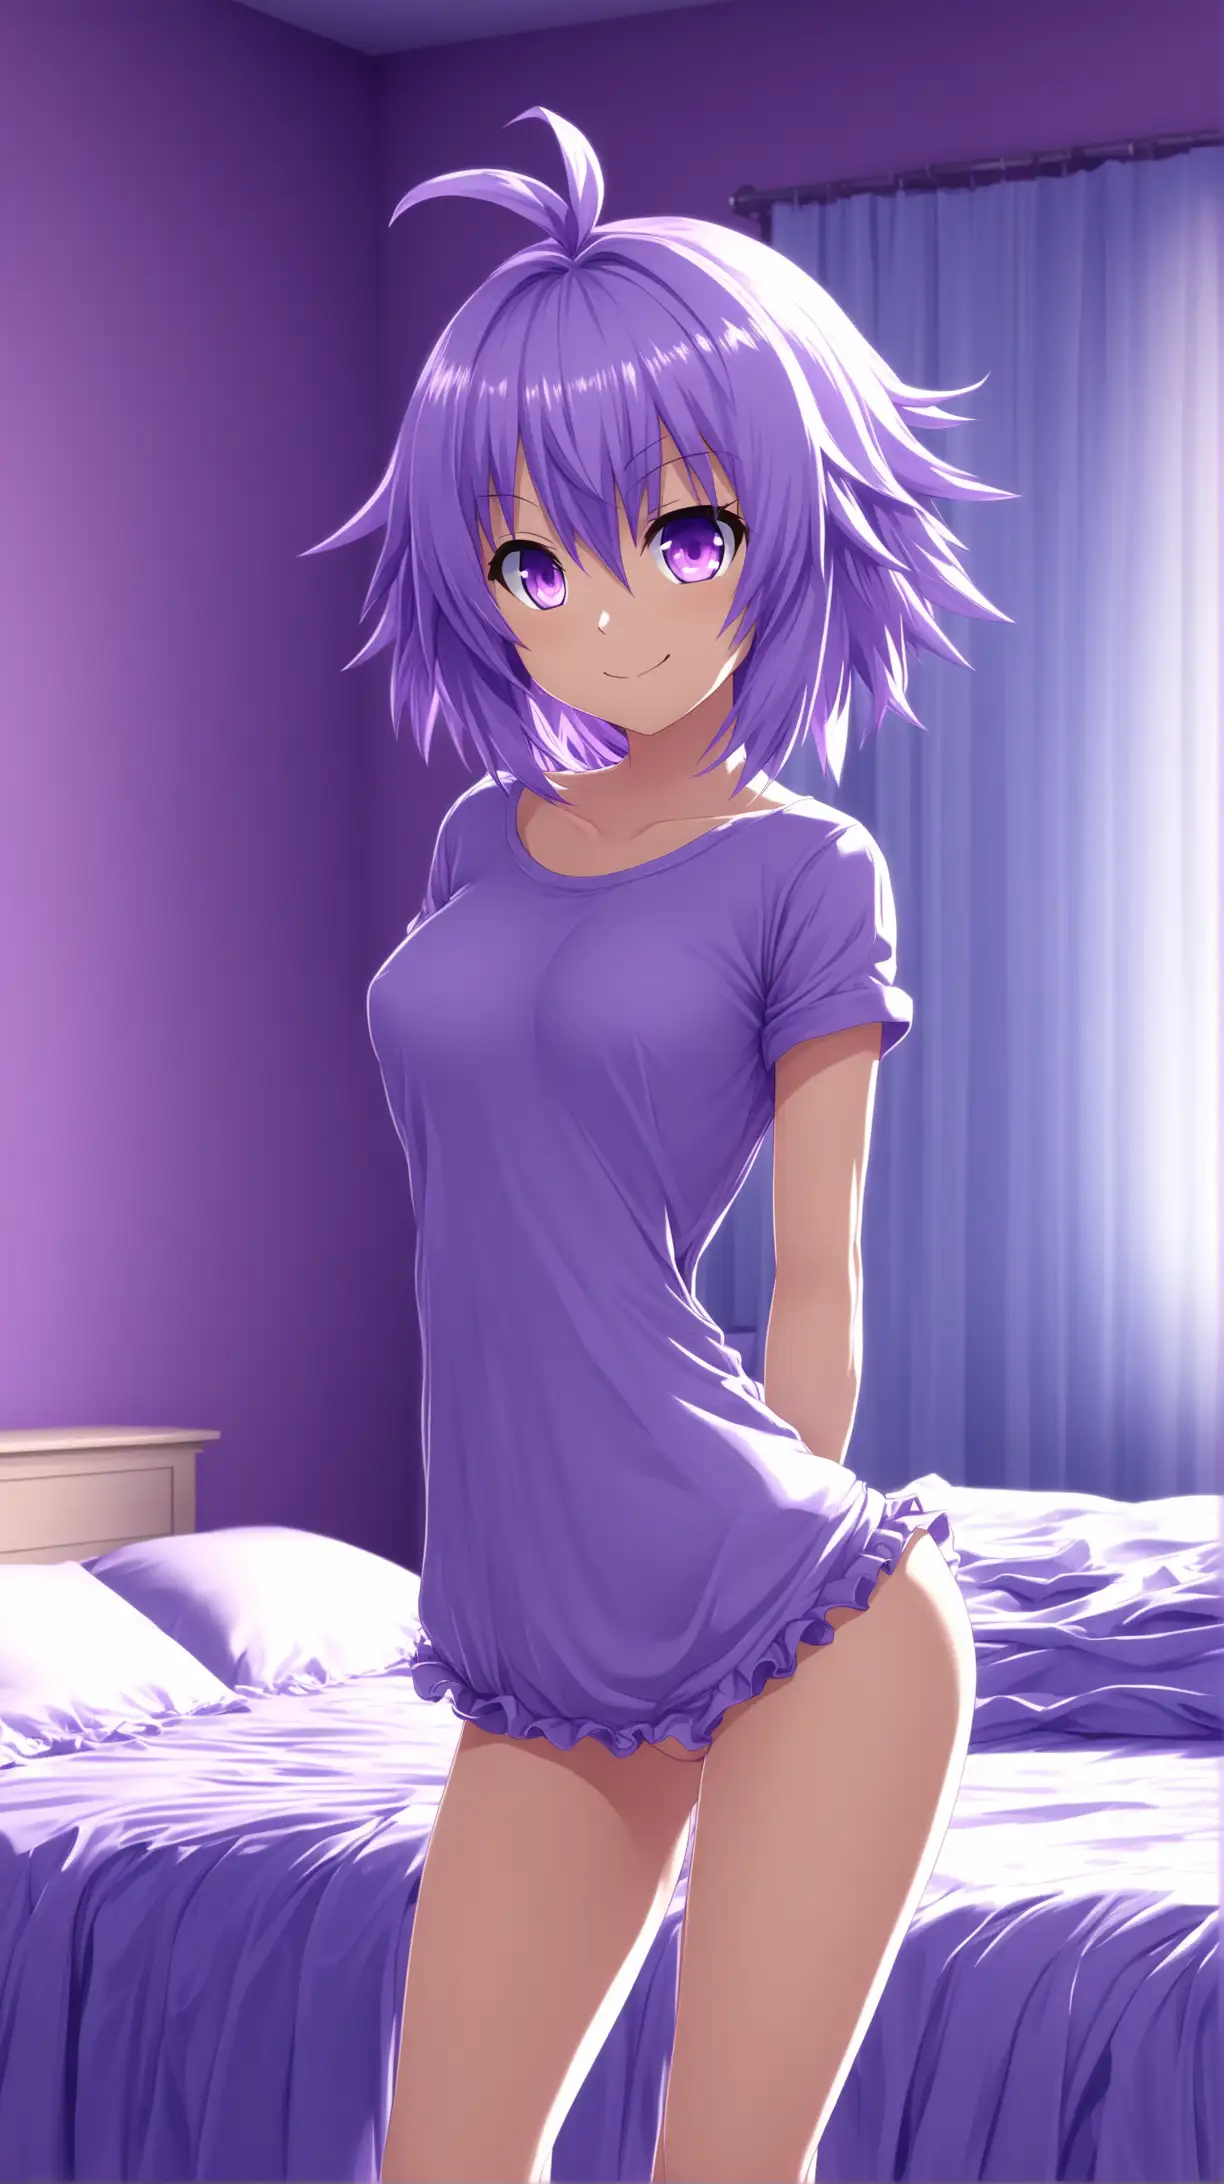 Lively Neptune from Hyperdimension Neptunia Smiling in Bedroom Scene